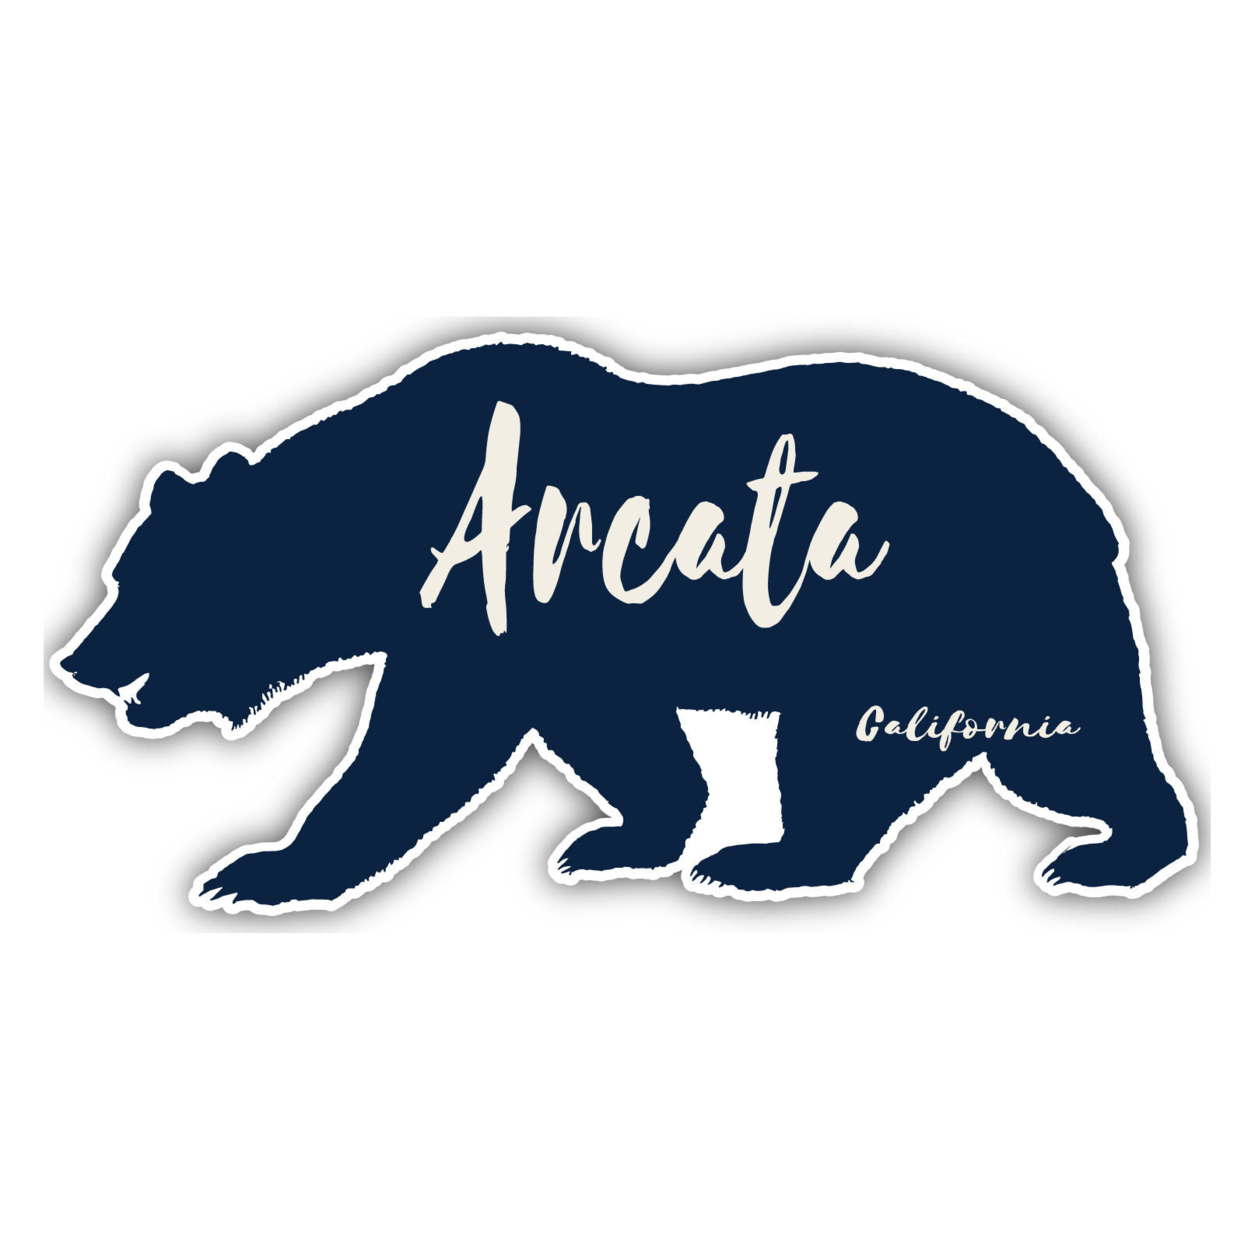 Arcata California Souvenir Decorative Stickers (Choose Theme And Size) - 4-Pack, 12-Inch, Bear